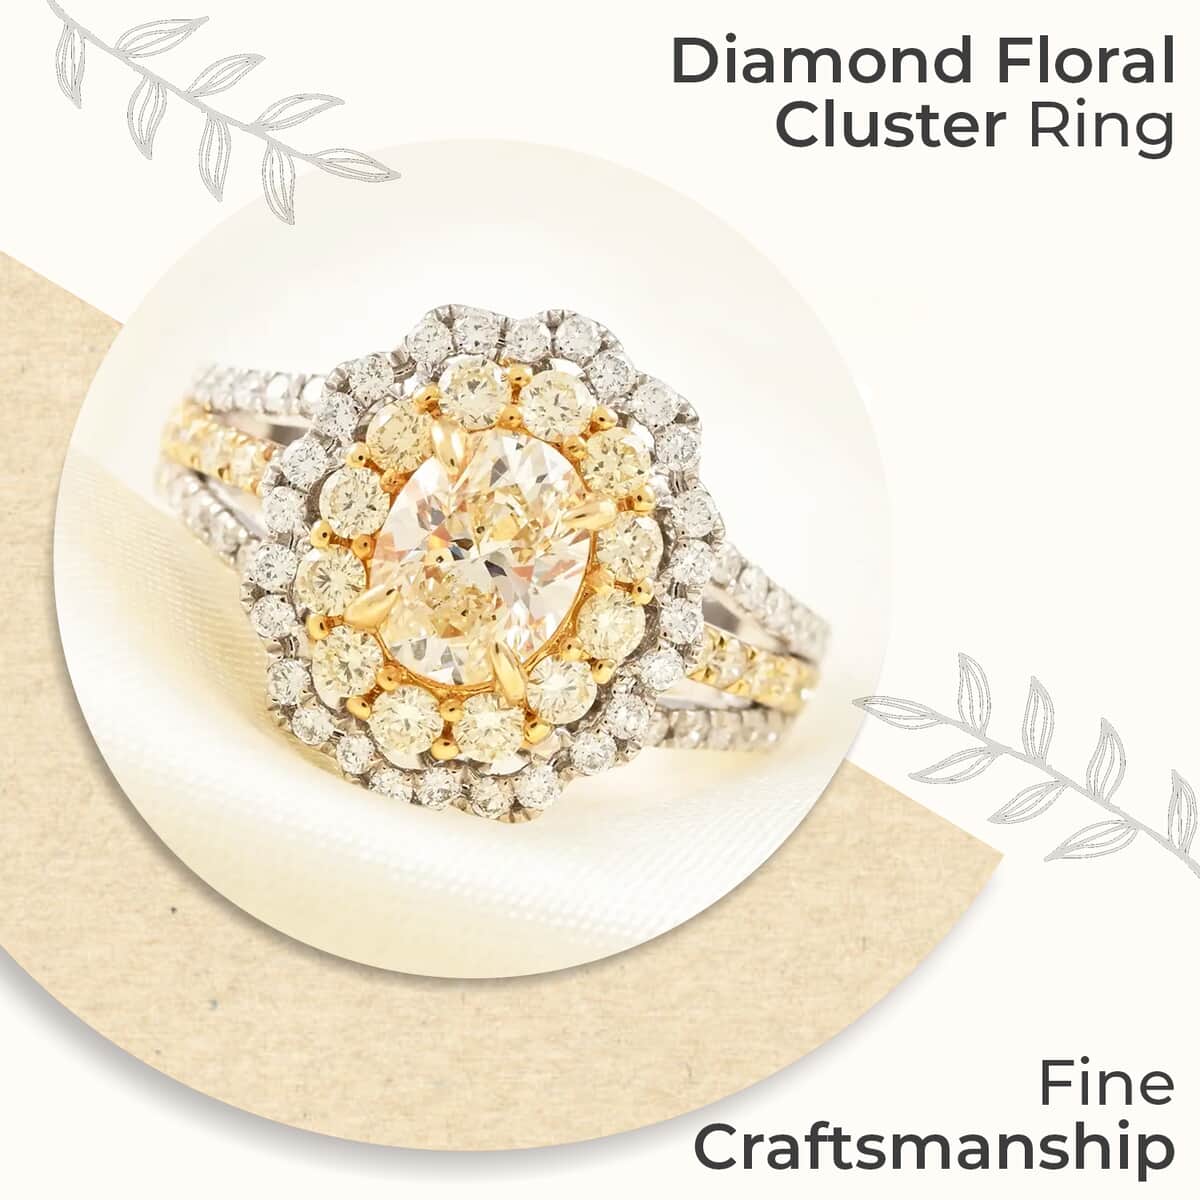 Modani Natural SI Yellow Diamond Ring , White Diamond Accent Ring, Diamond Floral Cluster Ring, 18K Yellow and White Gold Ring, Diamond Jewelry For Her 6.60 Grams 2.15 ctw (Size 7.0) image number 1